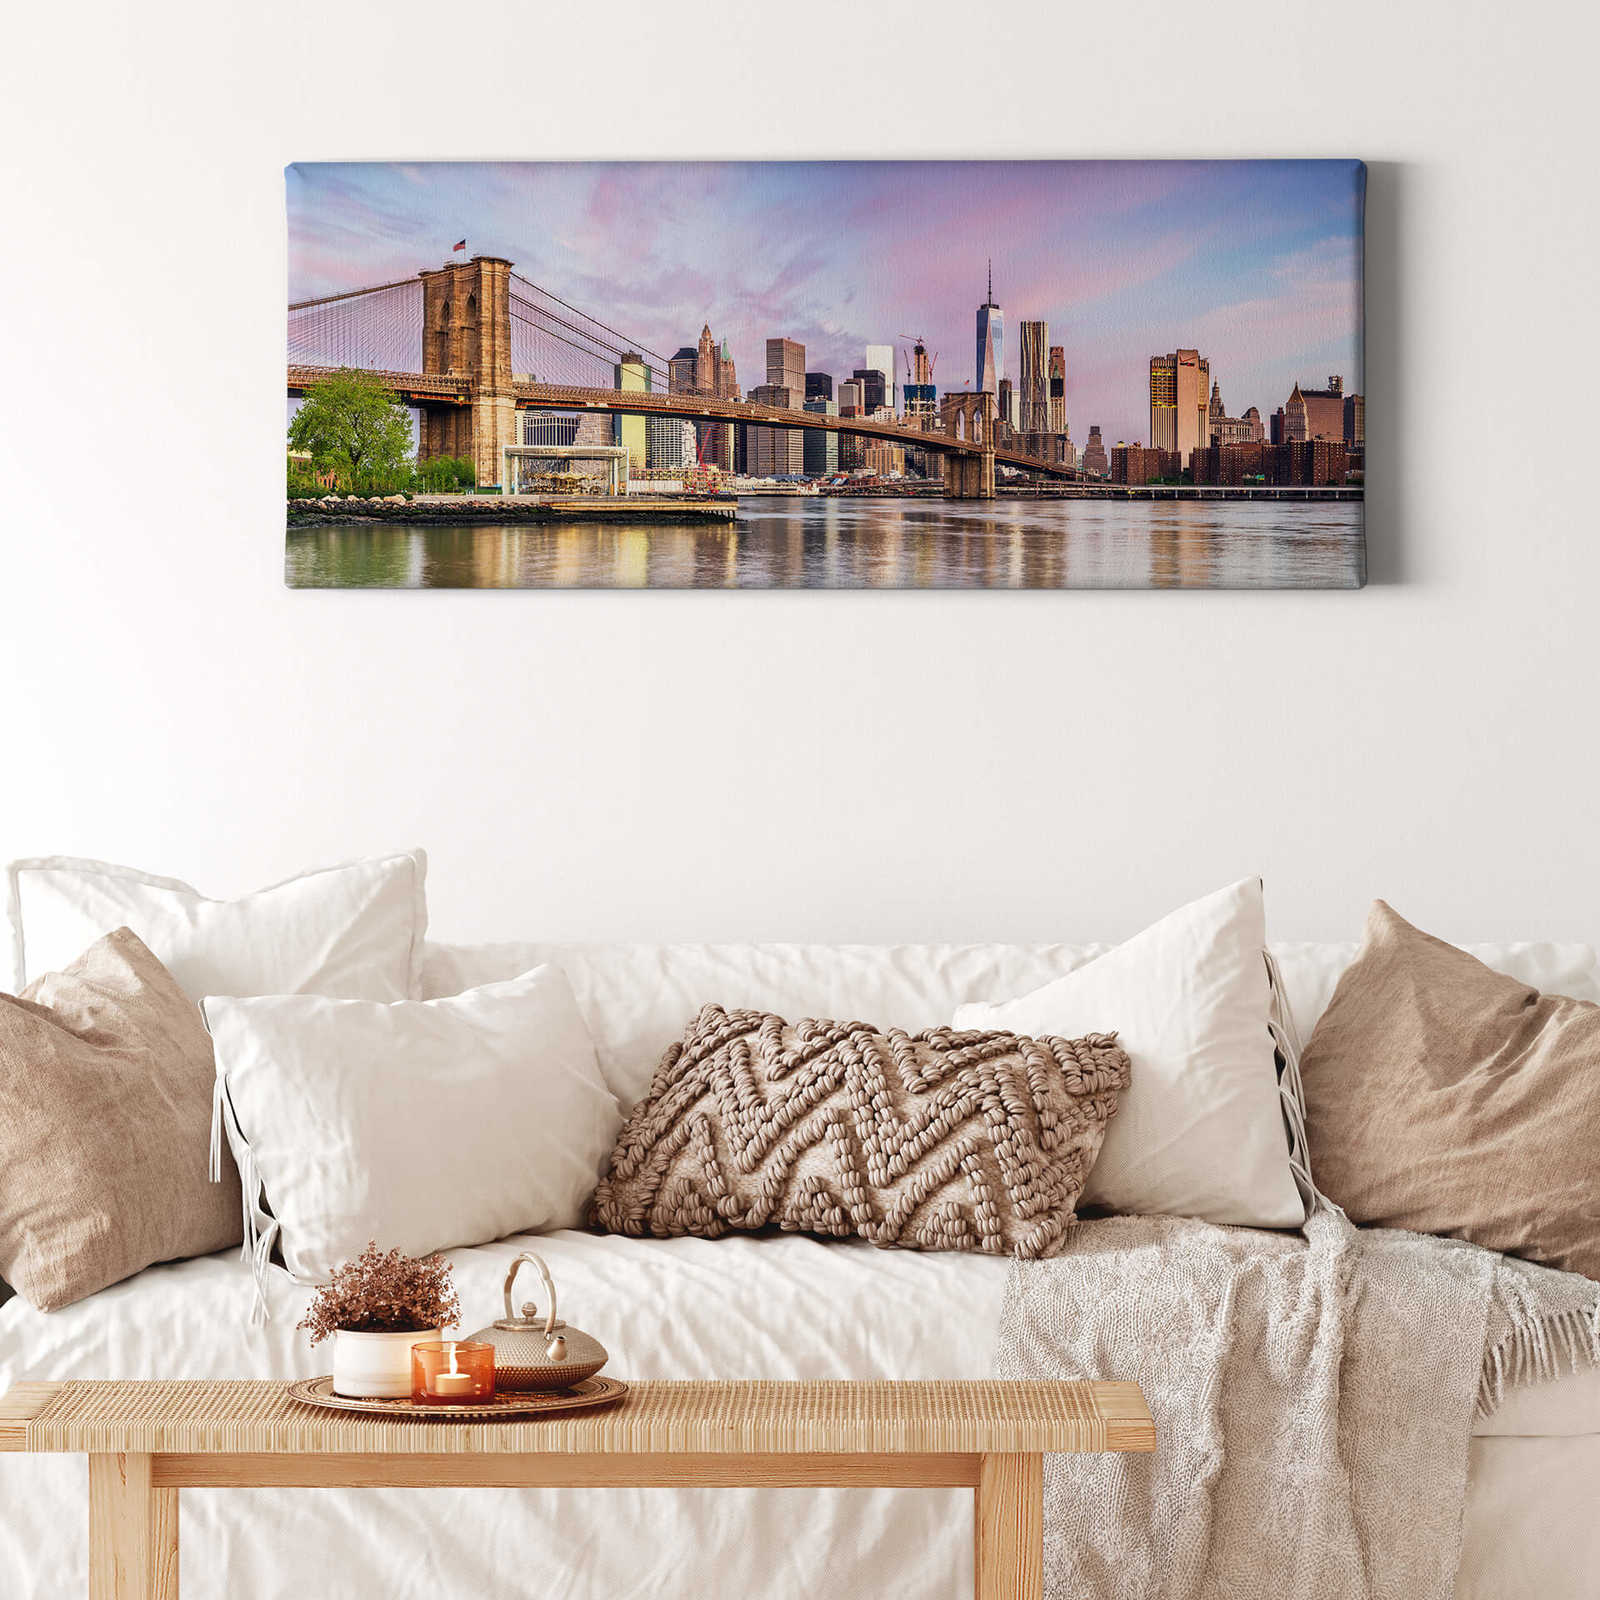             Panorama canvas print Manhattan, Brooklyn Bridge
        